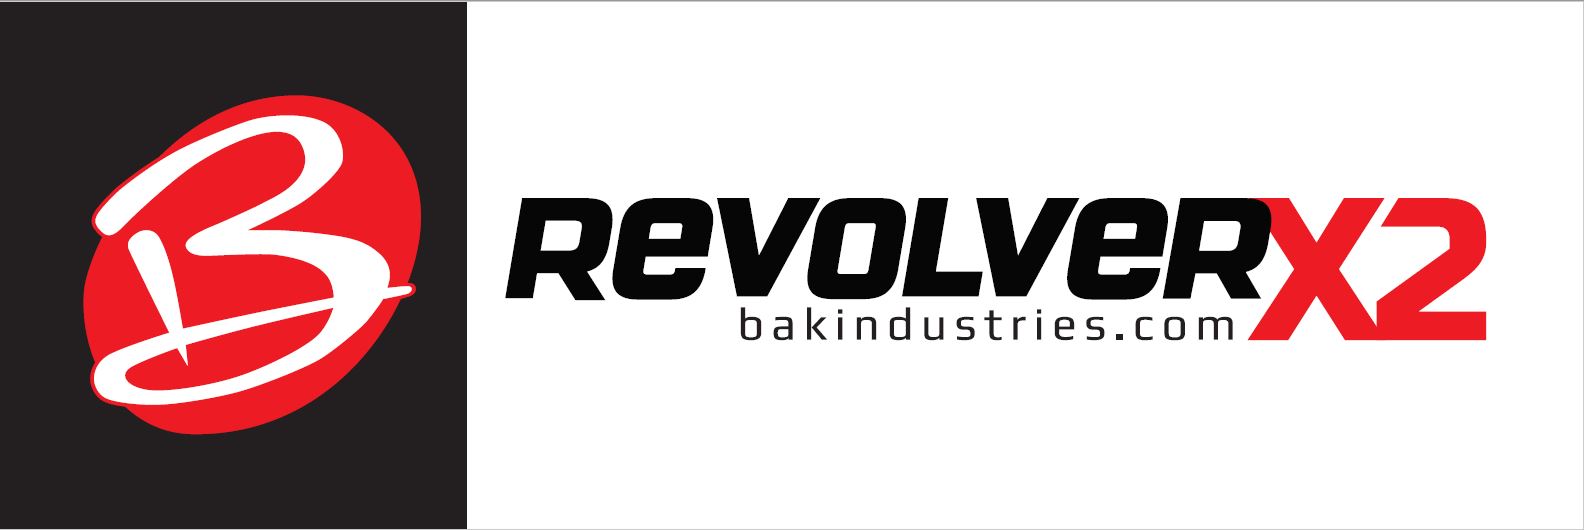 RevolverX2_Logo.jpg